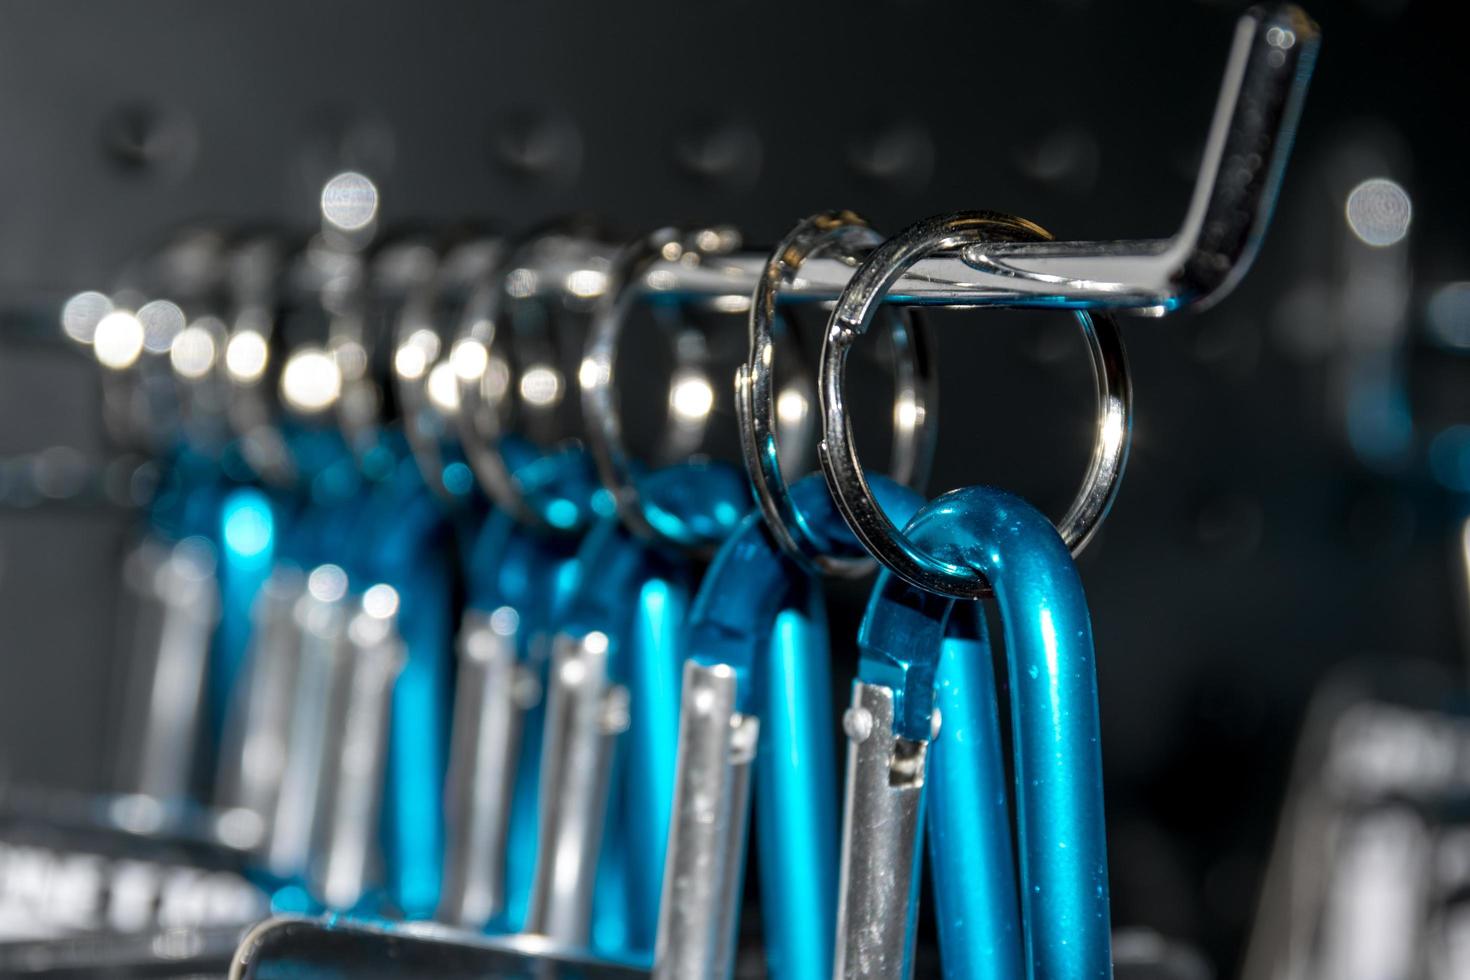 Stainless steel rings holding blue locking mechanisms photo